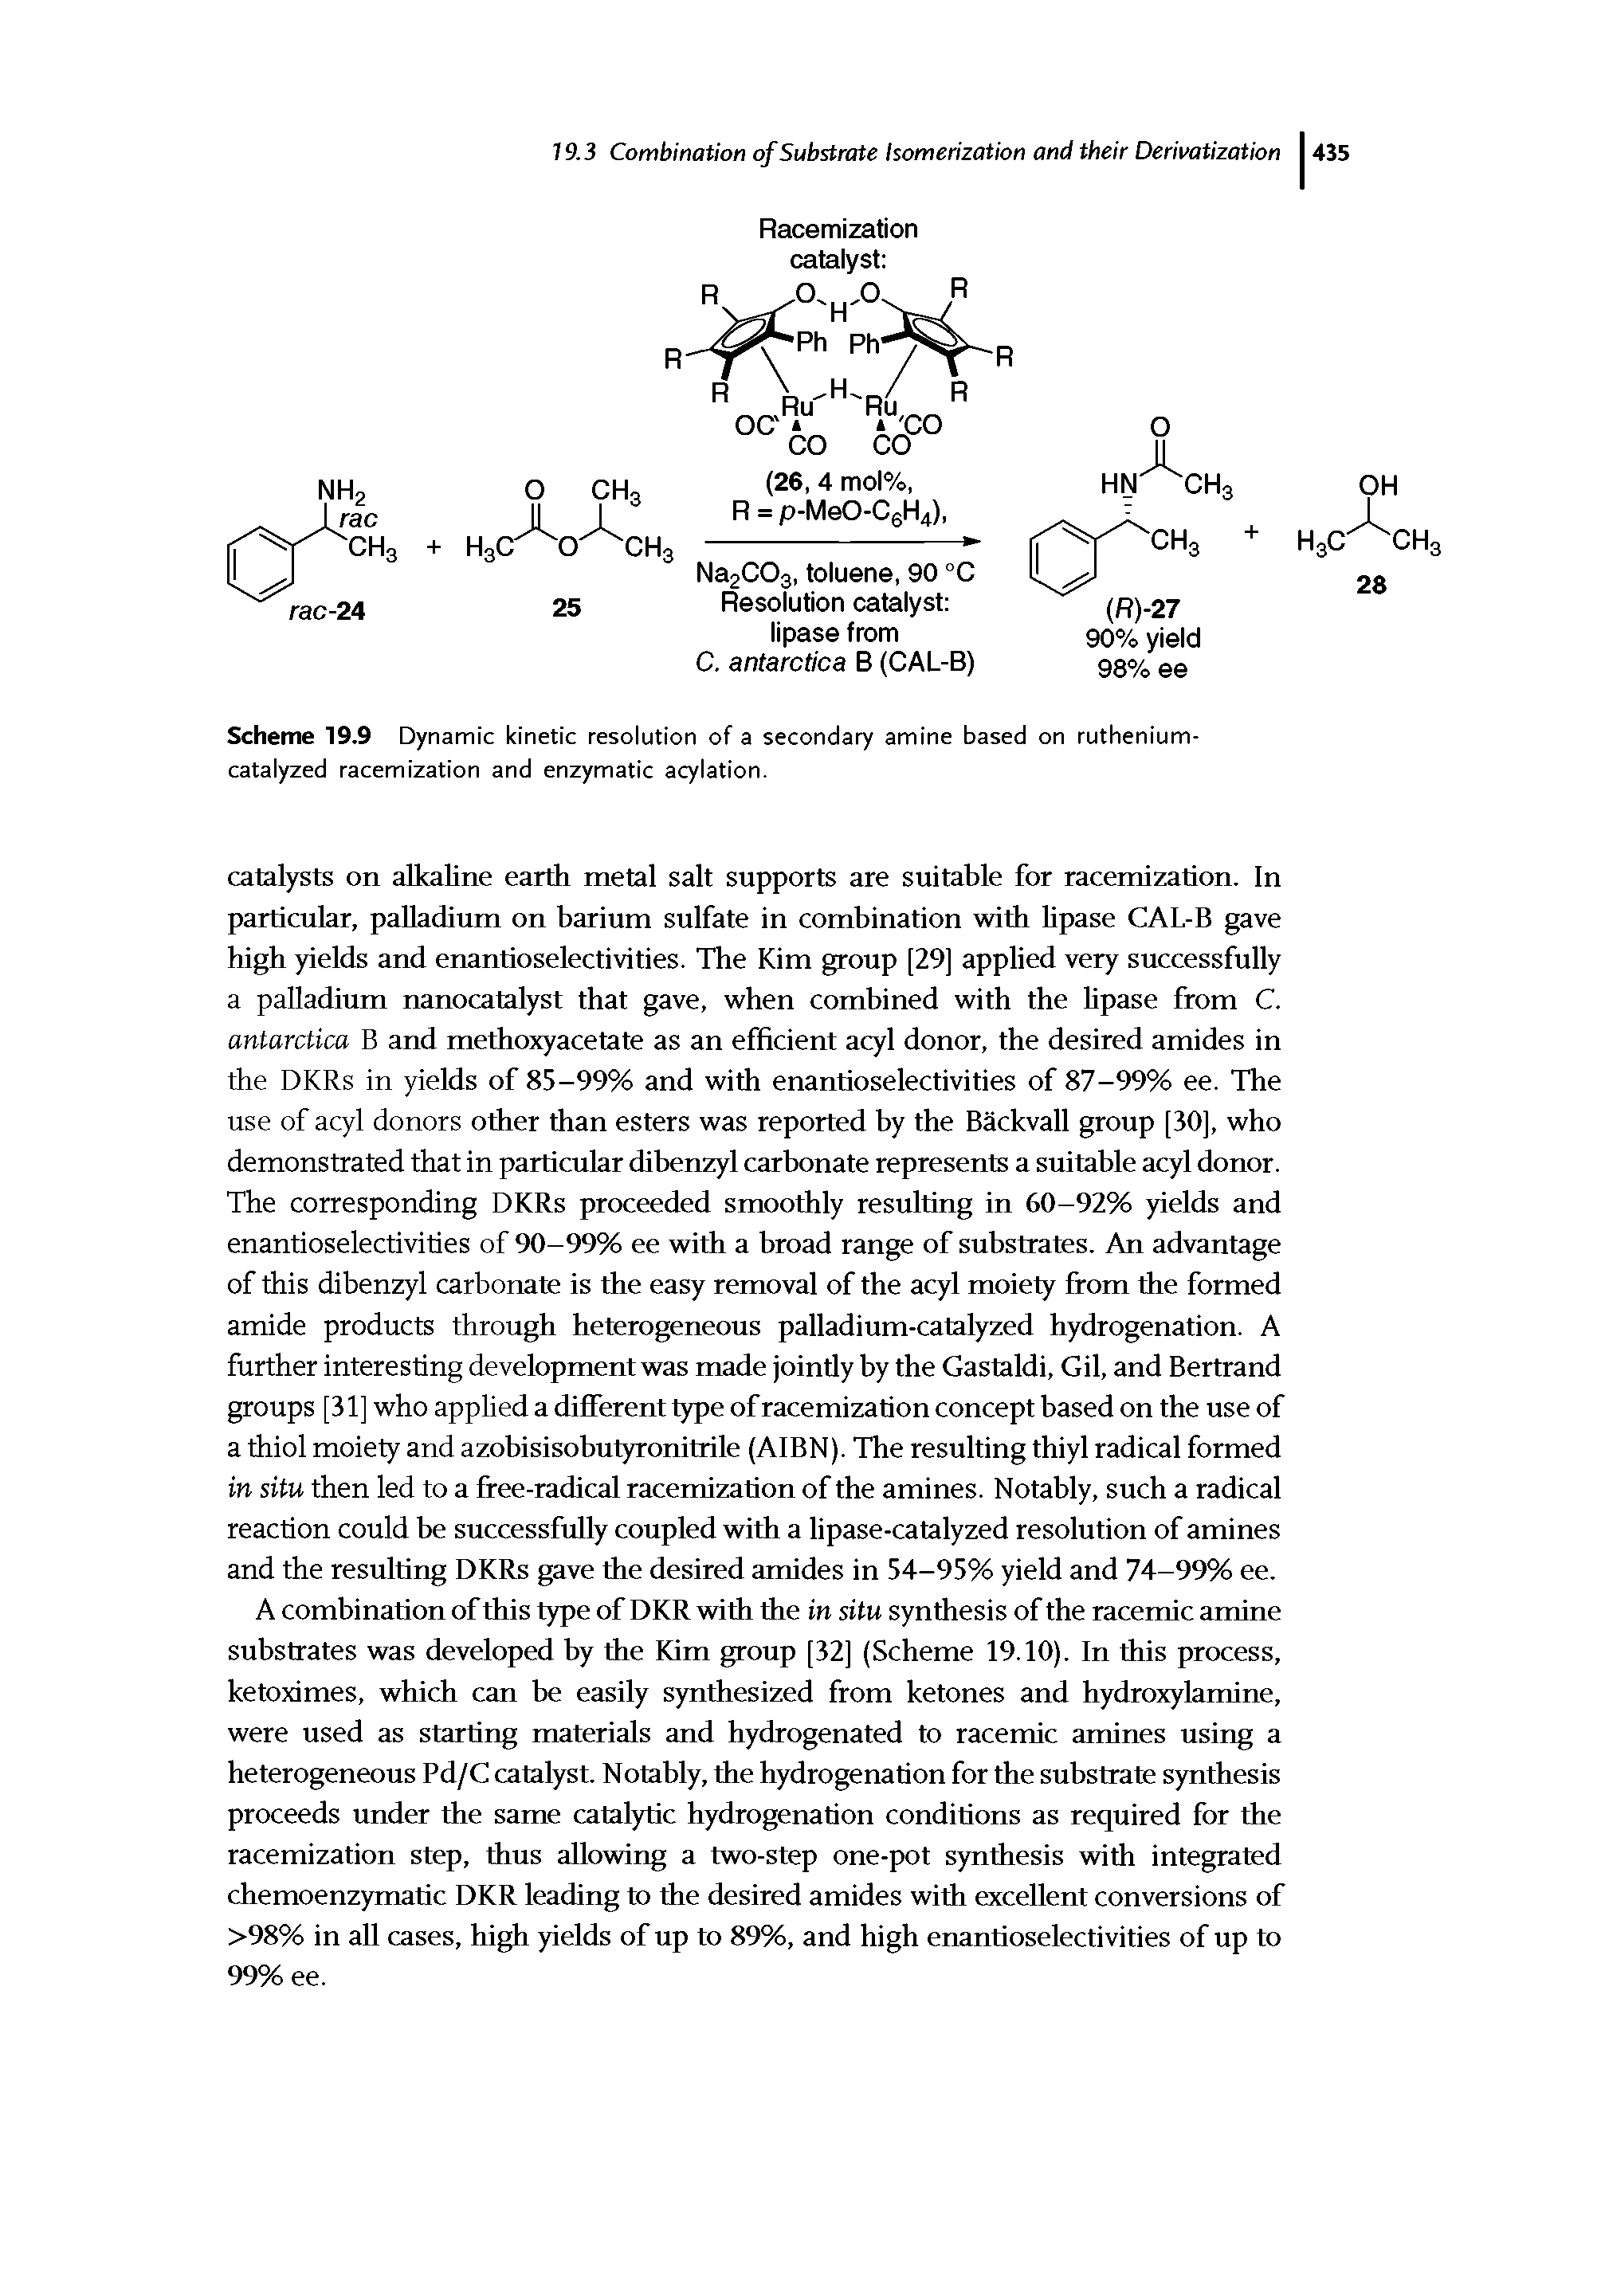 Scheme 19.9 Dynamic kinetic resolution of a secondary amine based on ruthenium-catalyzed racemization and enzymatic acylation.